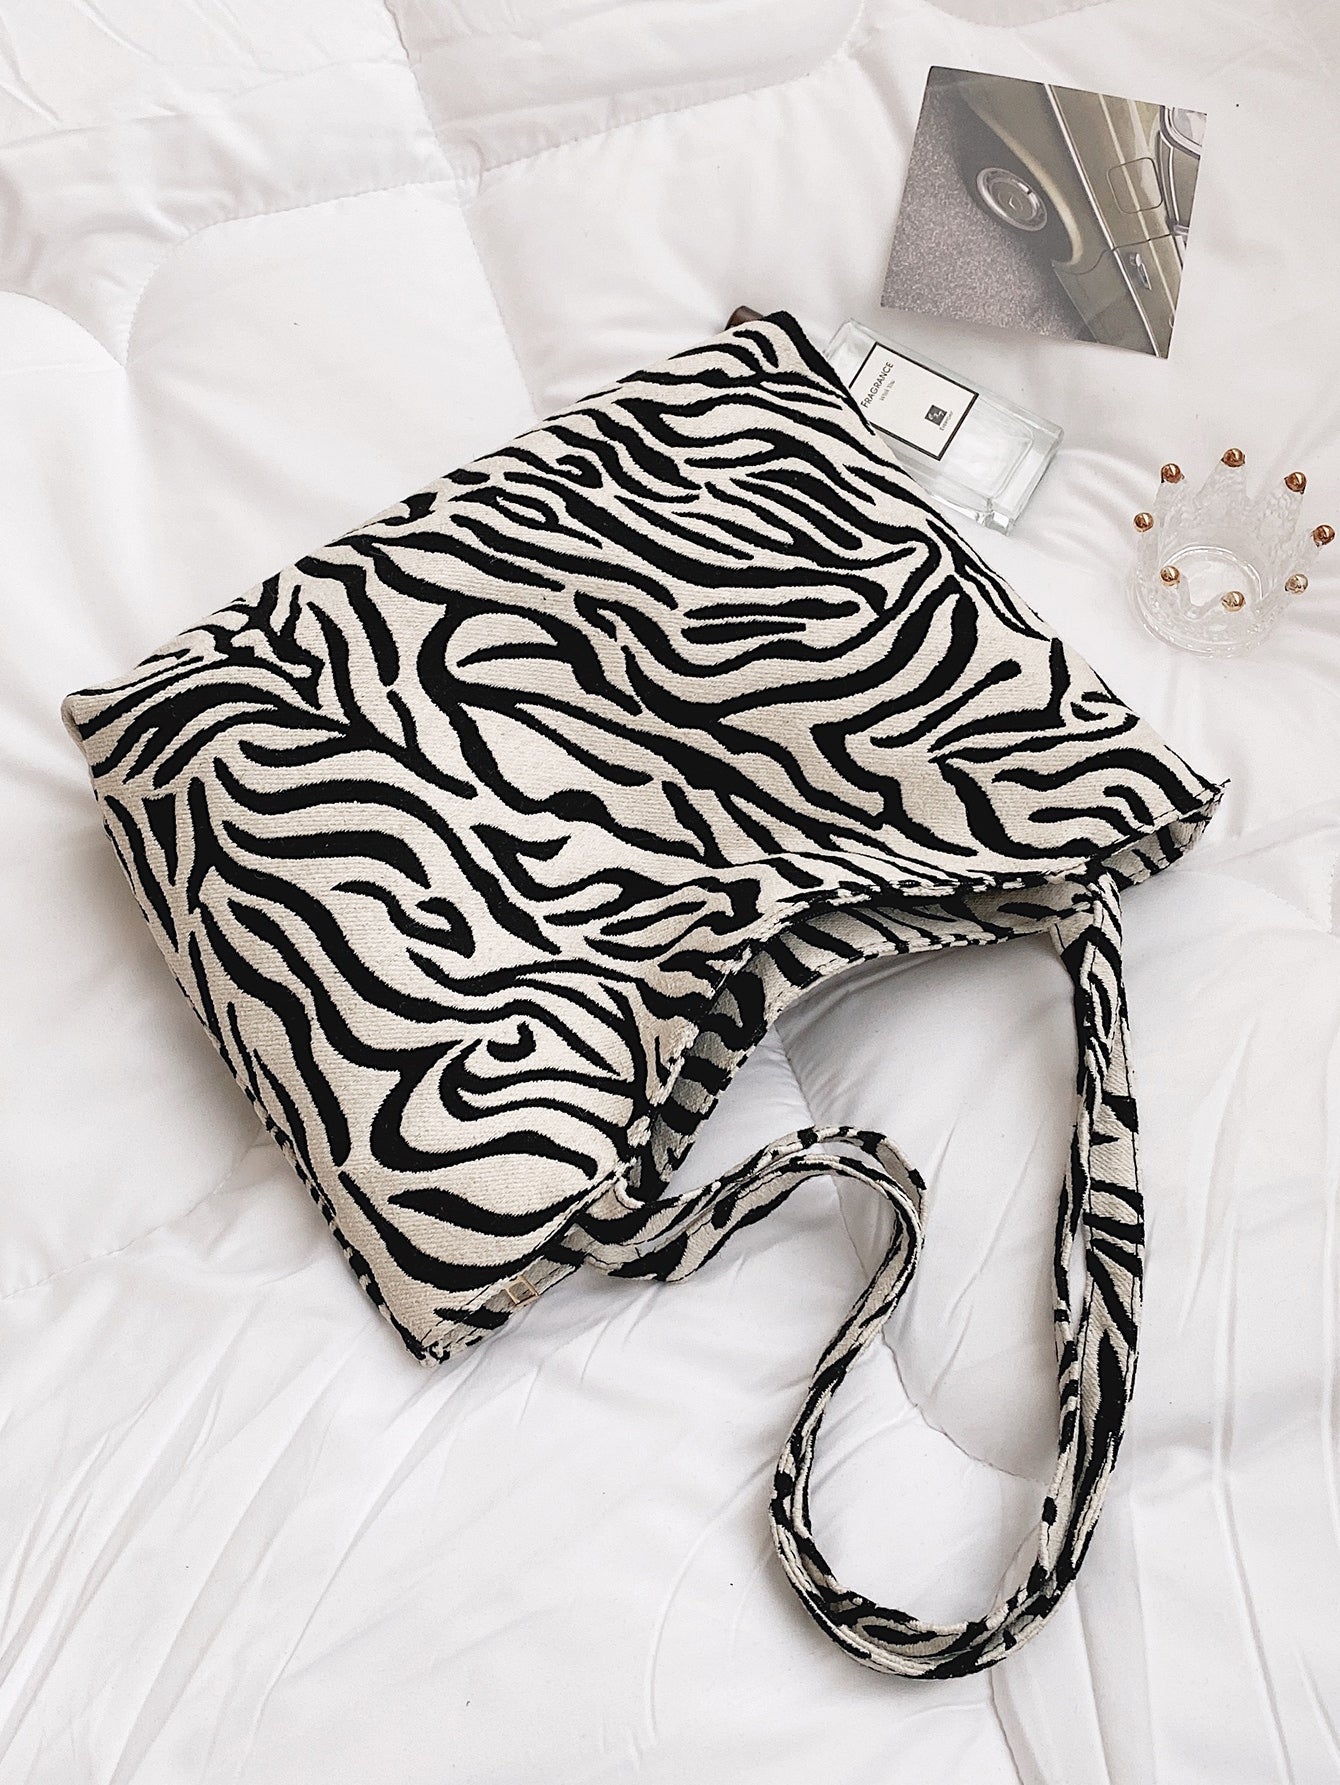 Zebra Striped Shoulder Tote Bag